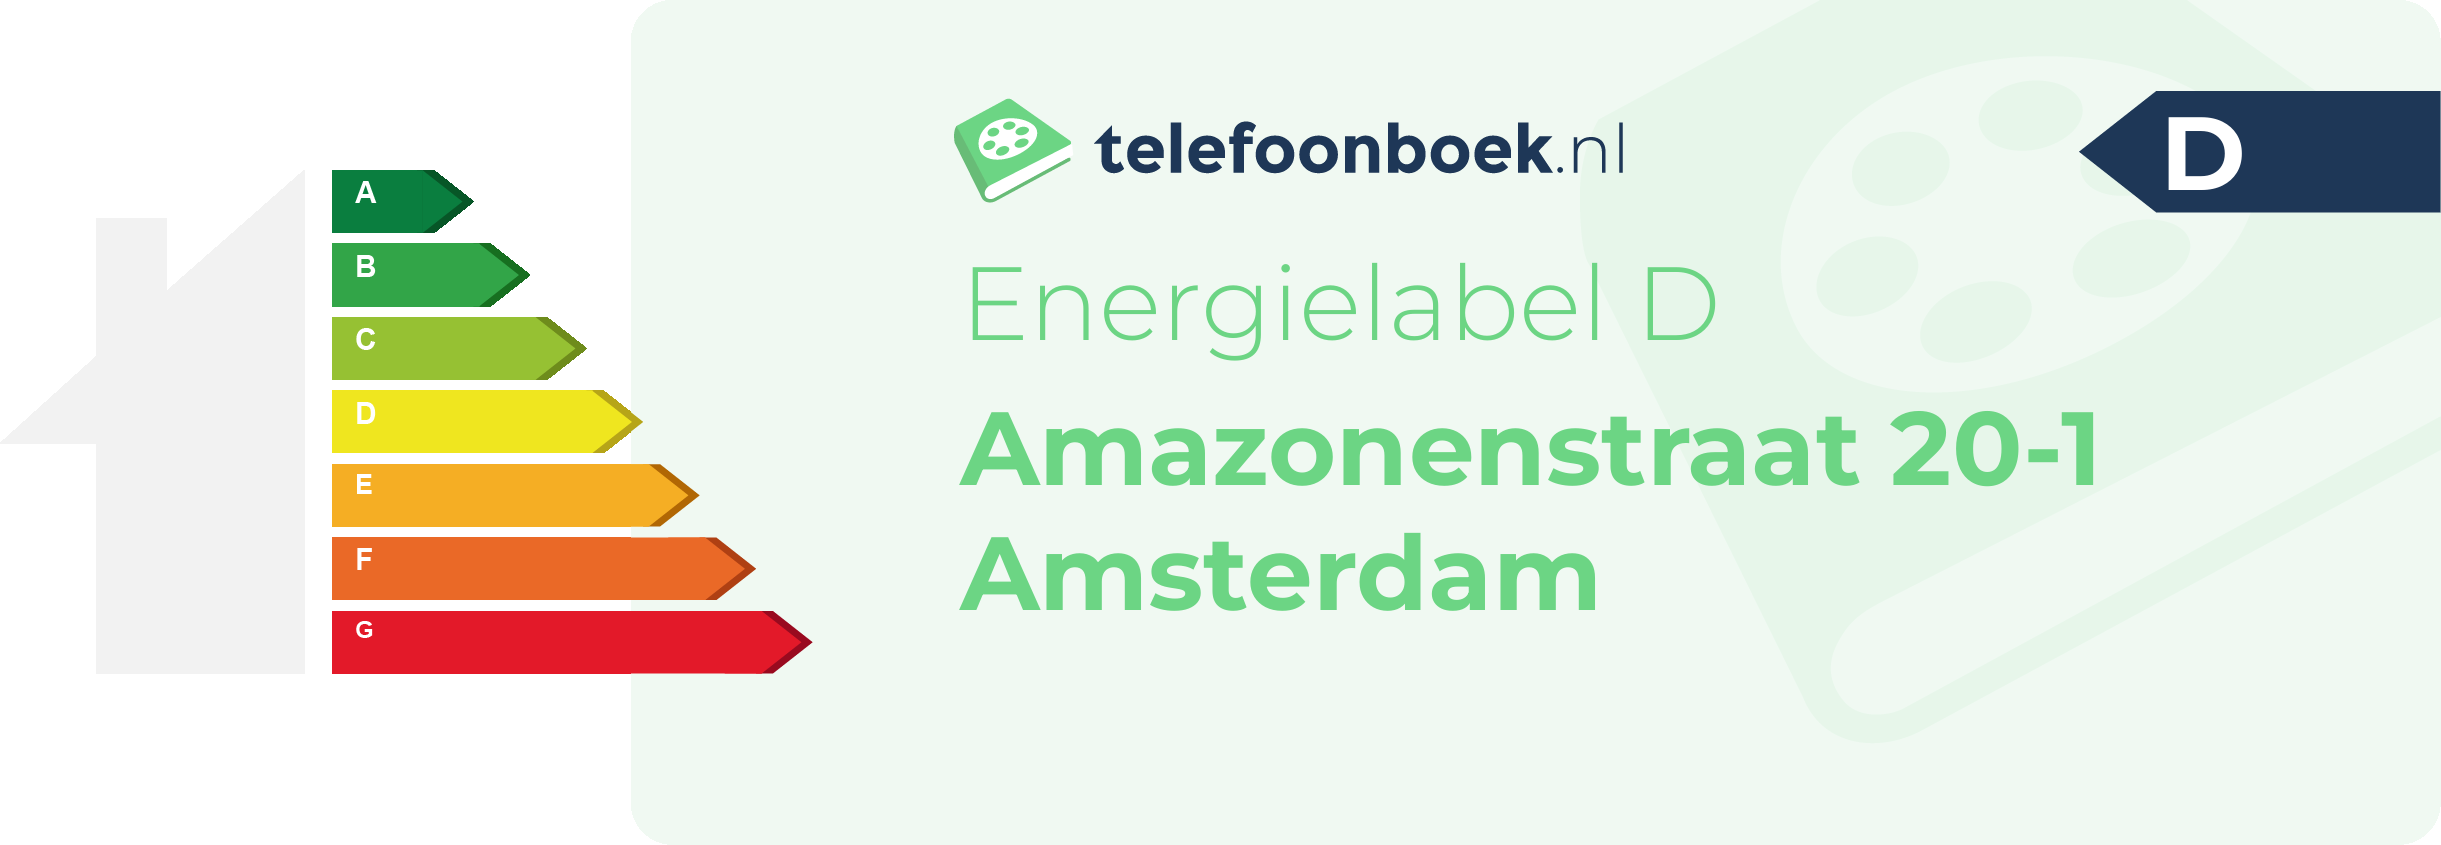 Energielabel Amazonenstraat 20-1 Amsterdam